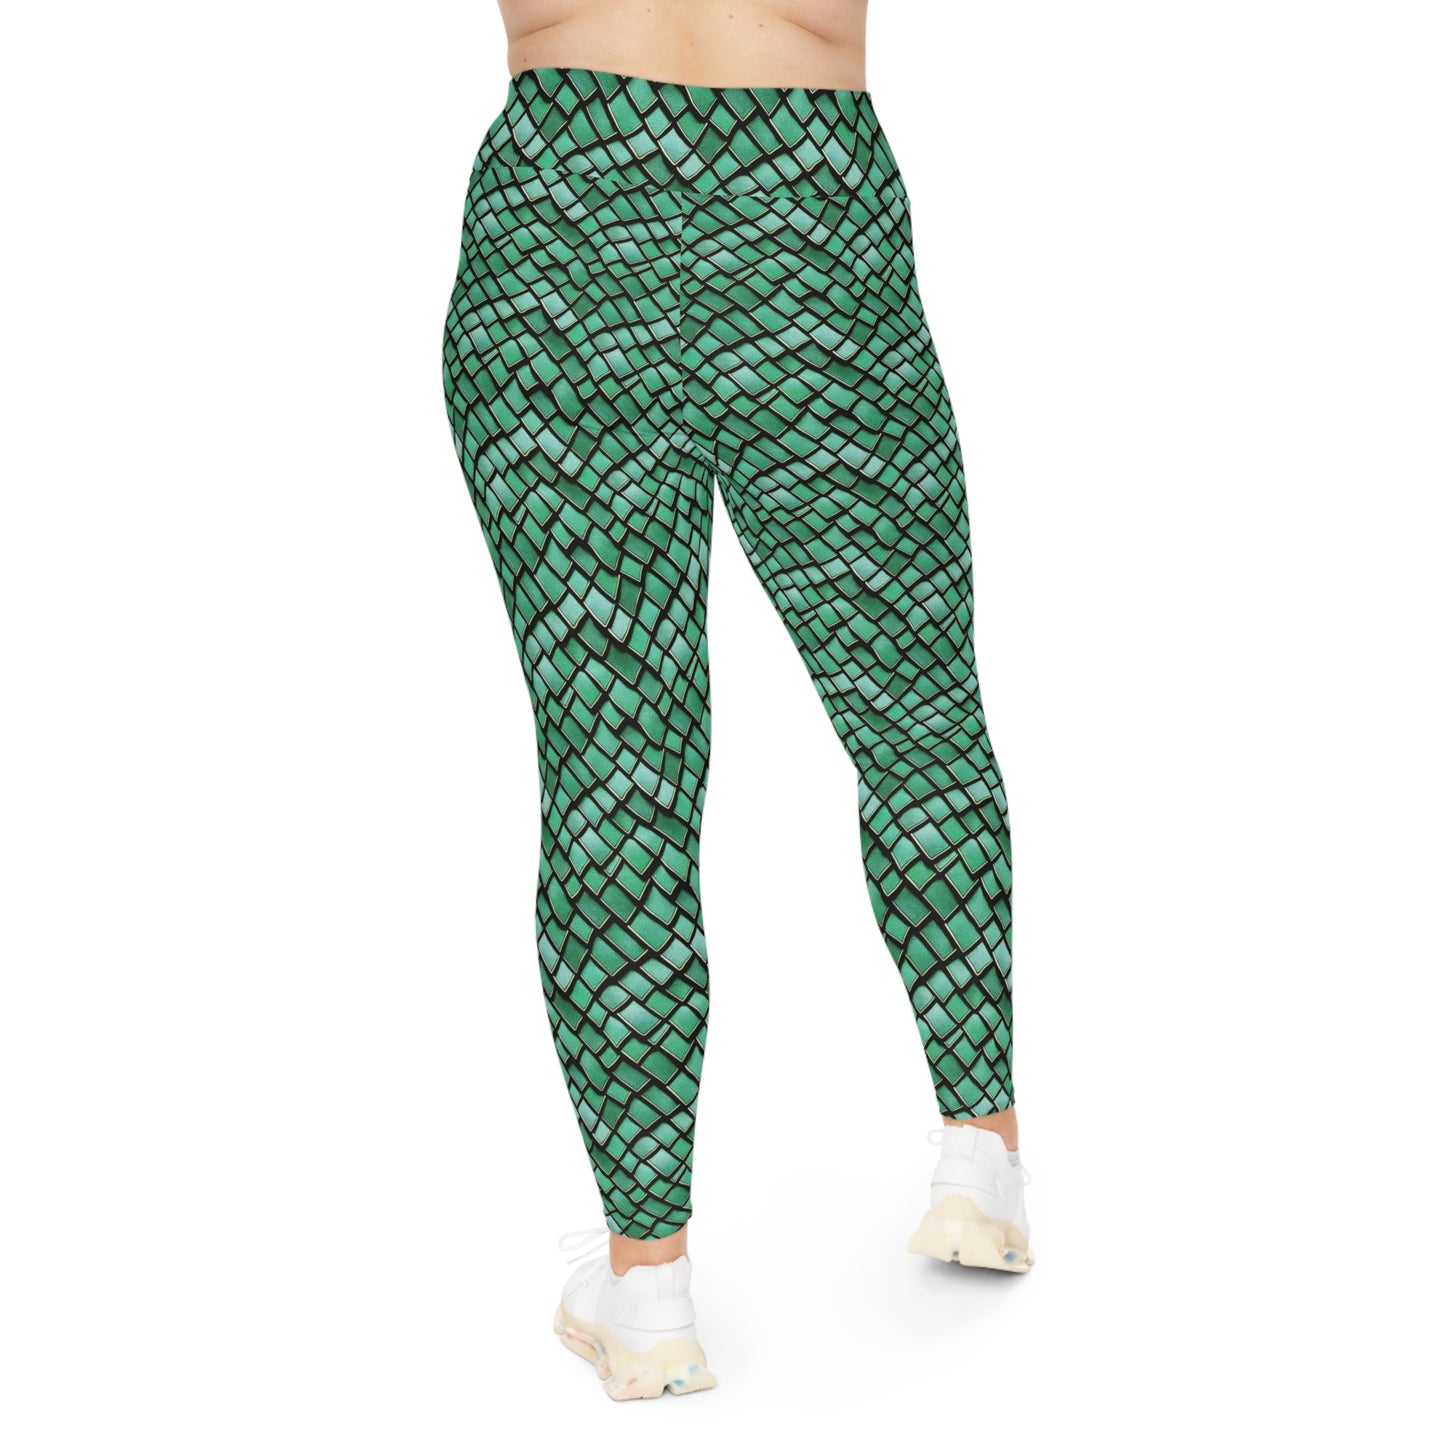 Plus Size Leggings Green Dragon Scales Mermaid Style Ocean Inspired Design - 4-Way Stretch, High-Rise Waistband, UPF 50+, Beach, Gym, Pool